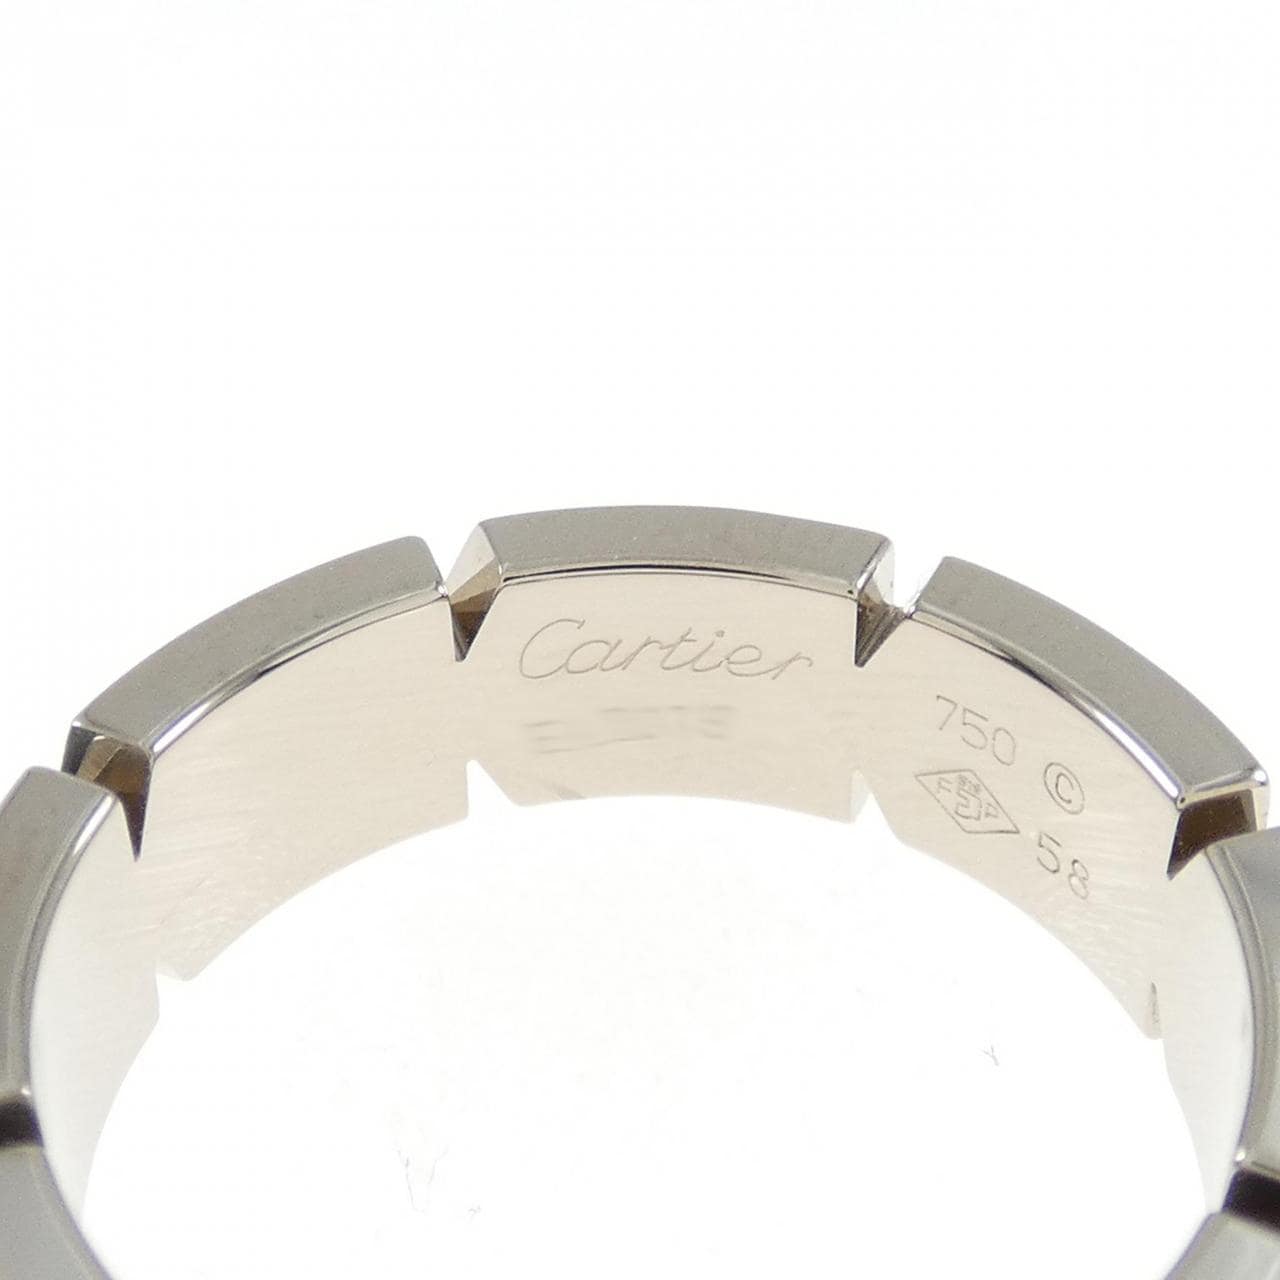 Cartier Tank Française small ring